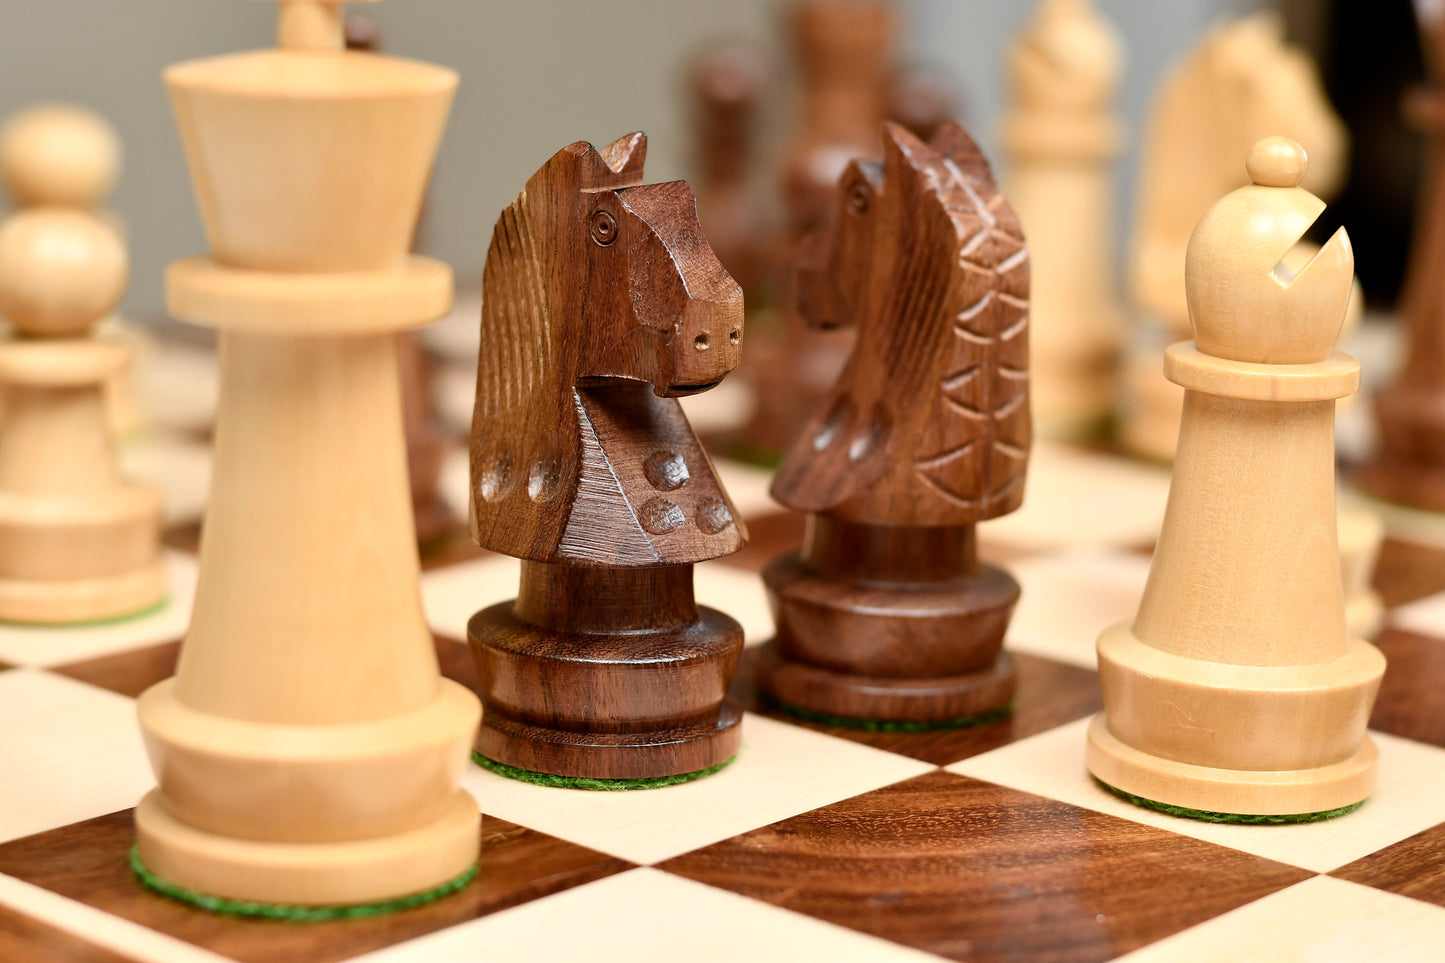 The Championship Series Staunton Chess Pieces in Sheesham Wood & Boxwood - 3.75" King